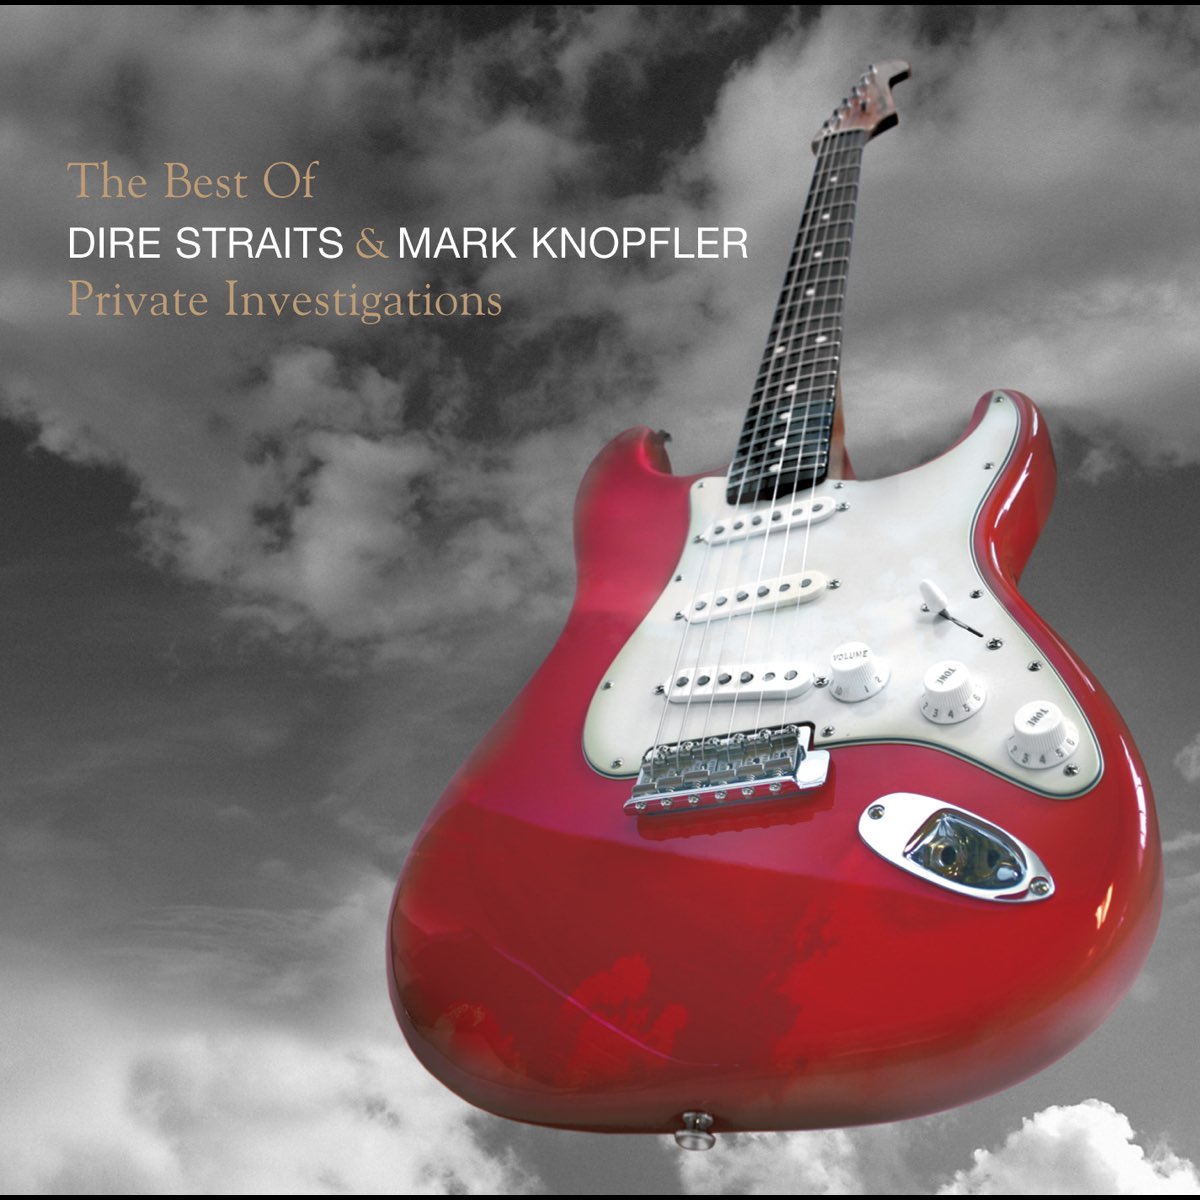 Рок Mercury Mark, Knopfler, Dire Straits - Private Investigations - The Best Of (Limited Red Vinyl 2LP) школьные приколы сборник рассказов